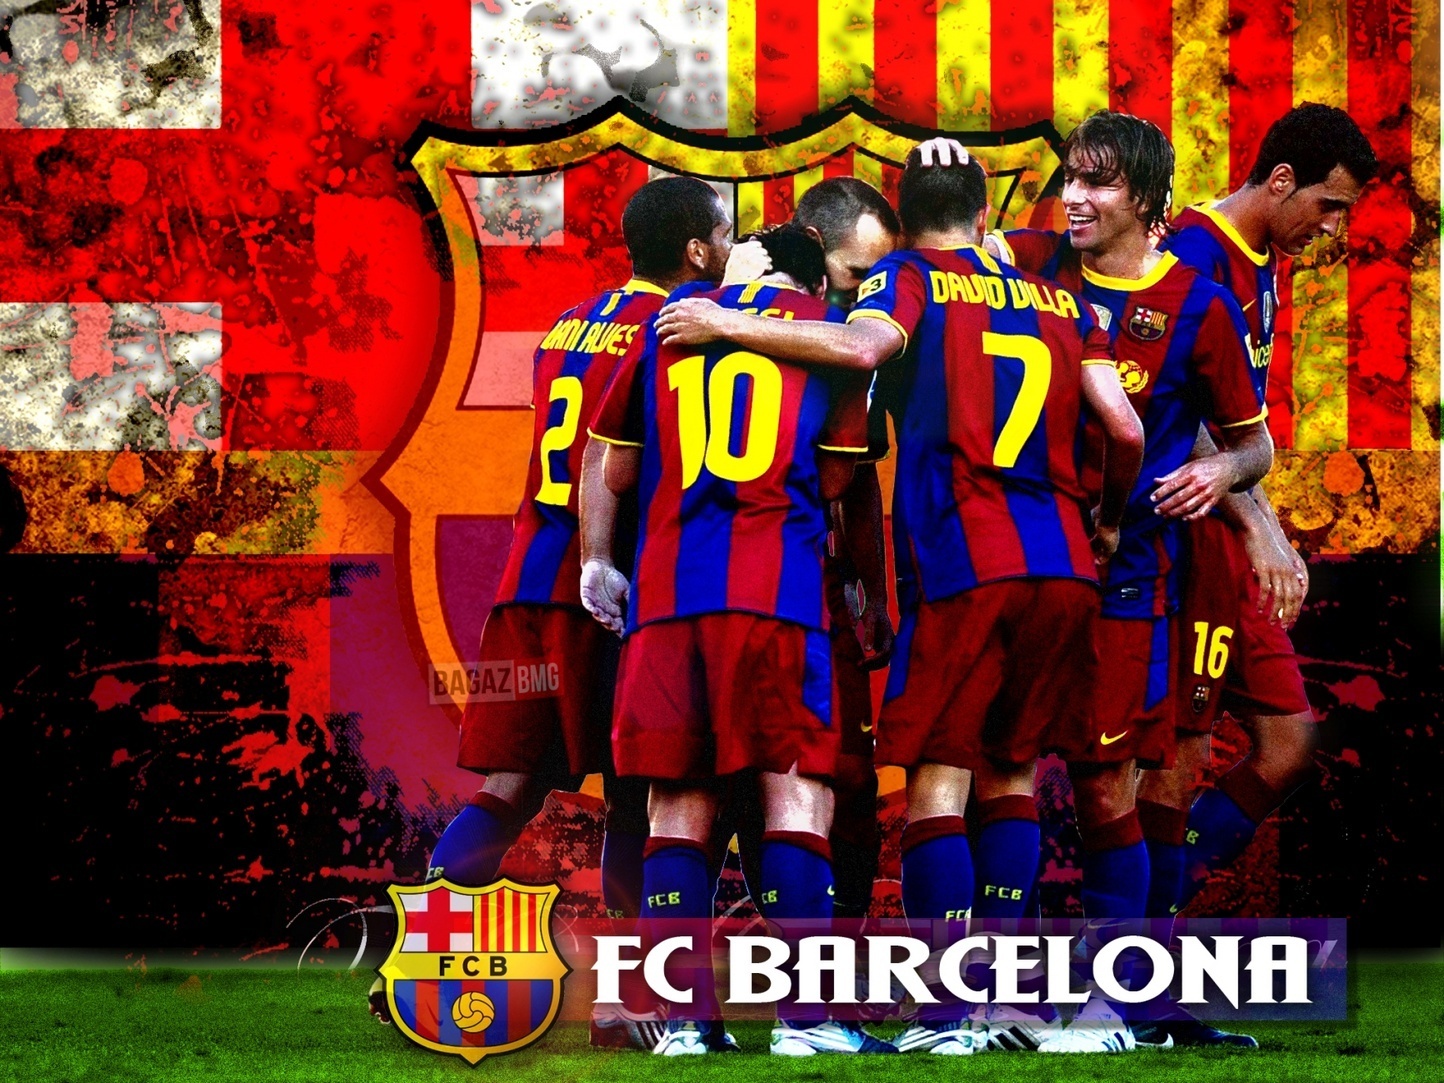 Barcelona Players Celebrating 2010/11 - Fc Barcelona 10 11 - HD Wallpaper 